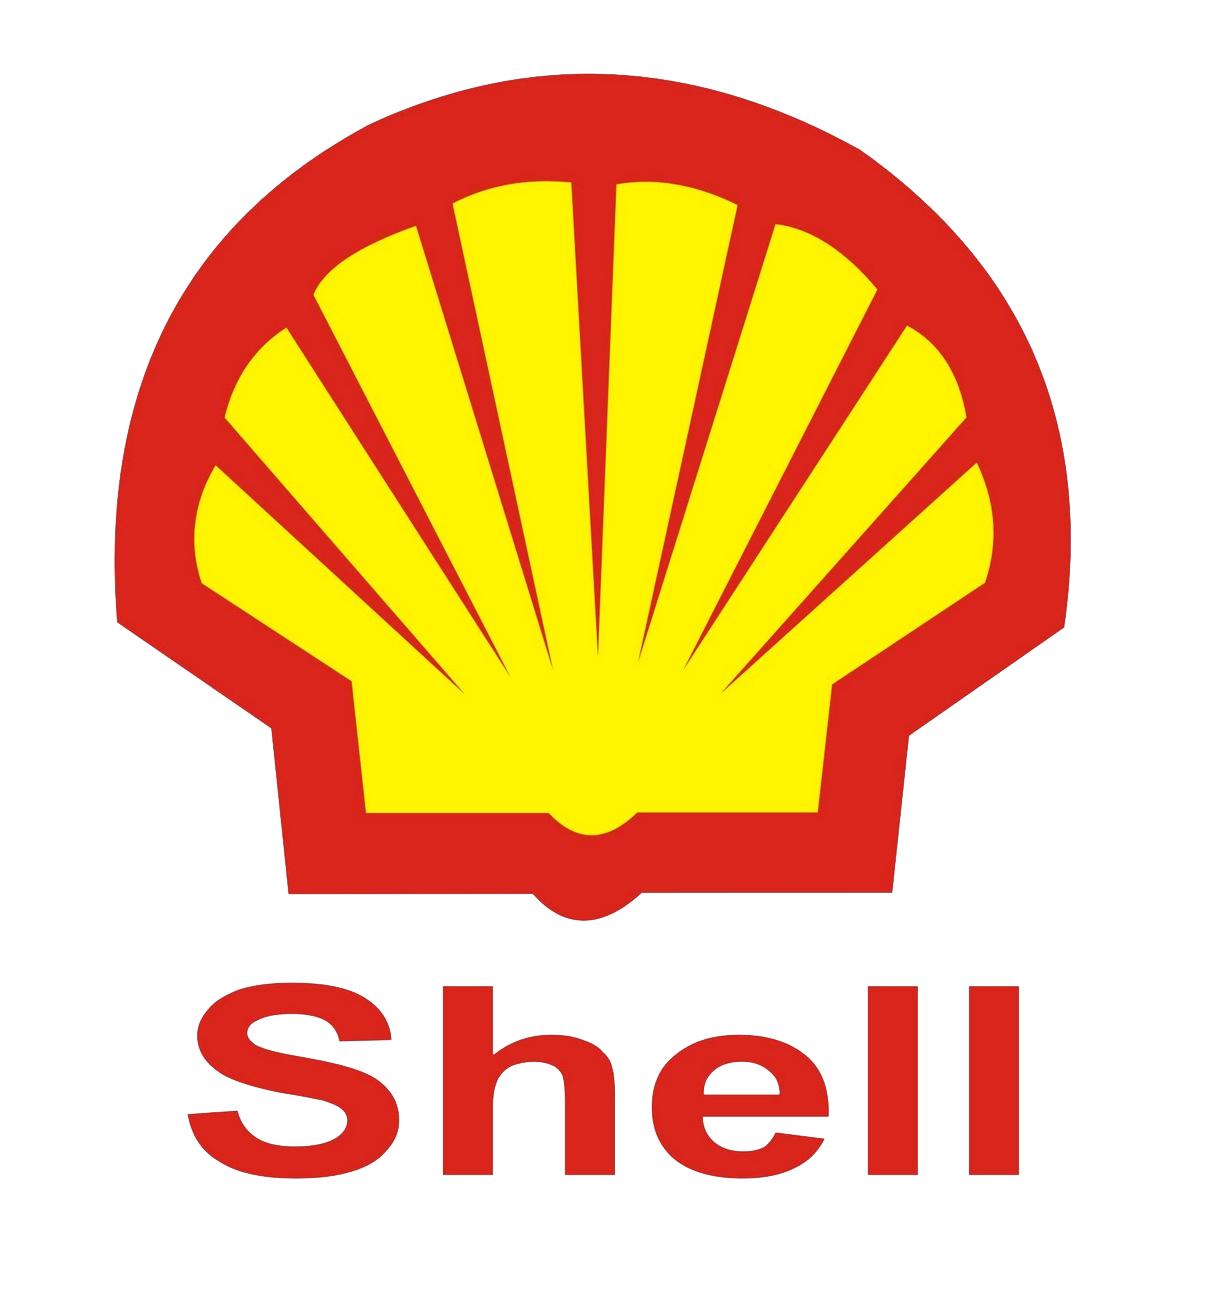 kisspng-royal-dutch-shell-logo-company-business-shell-5ac0baa911c722.5356312215225801370728